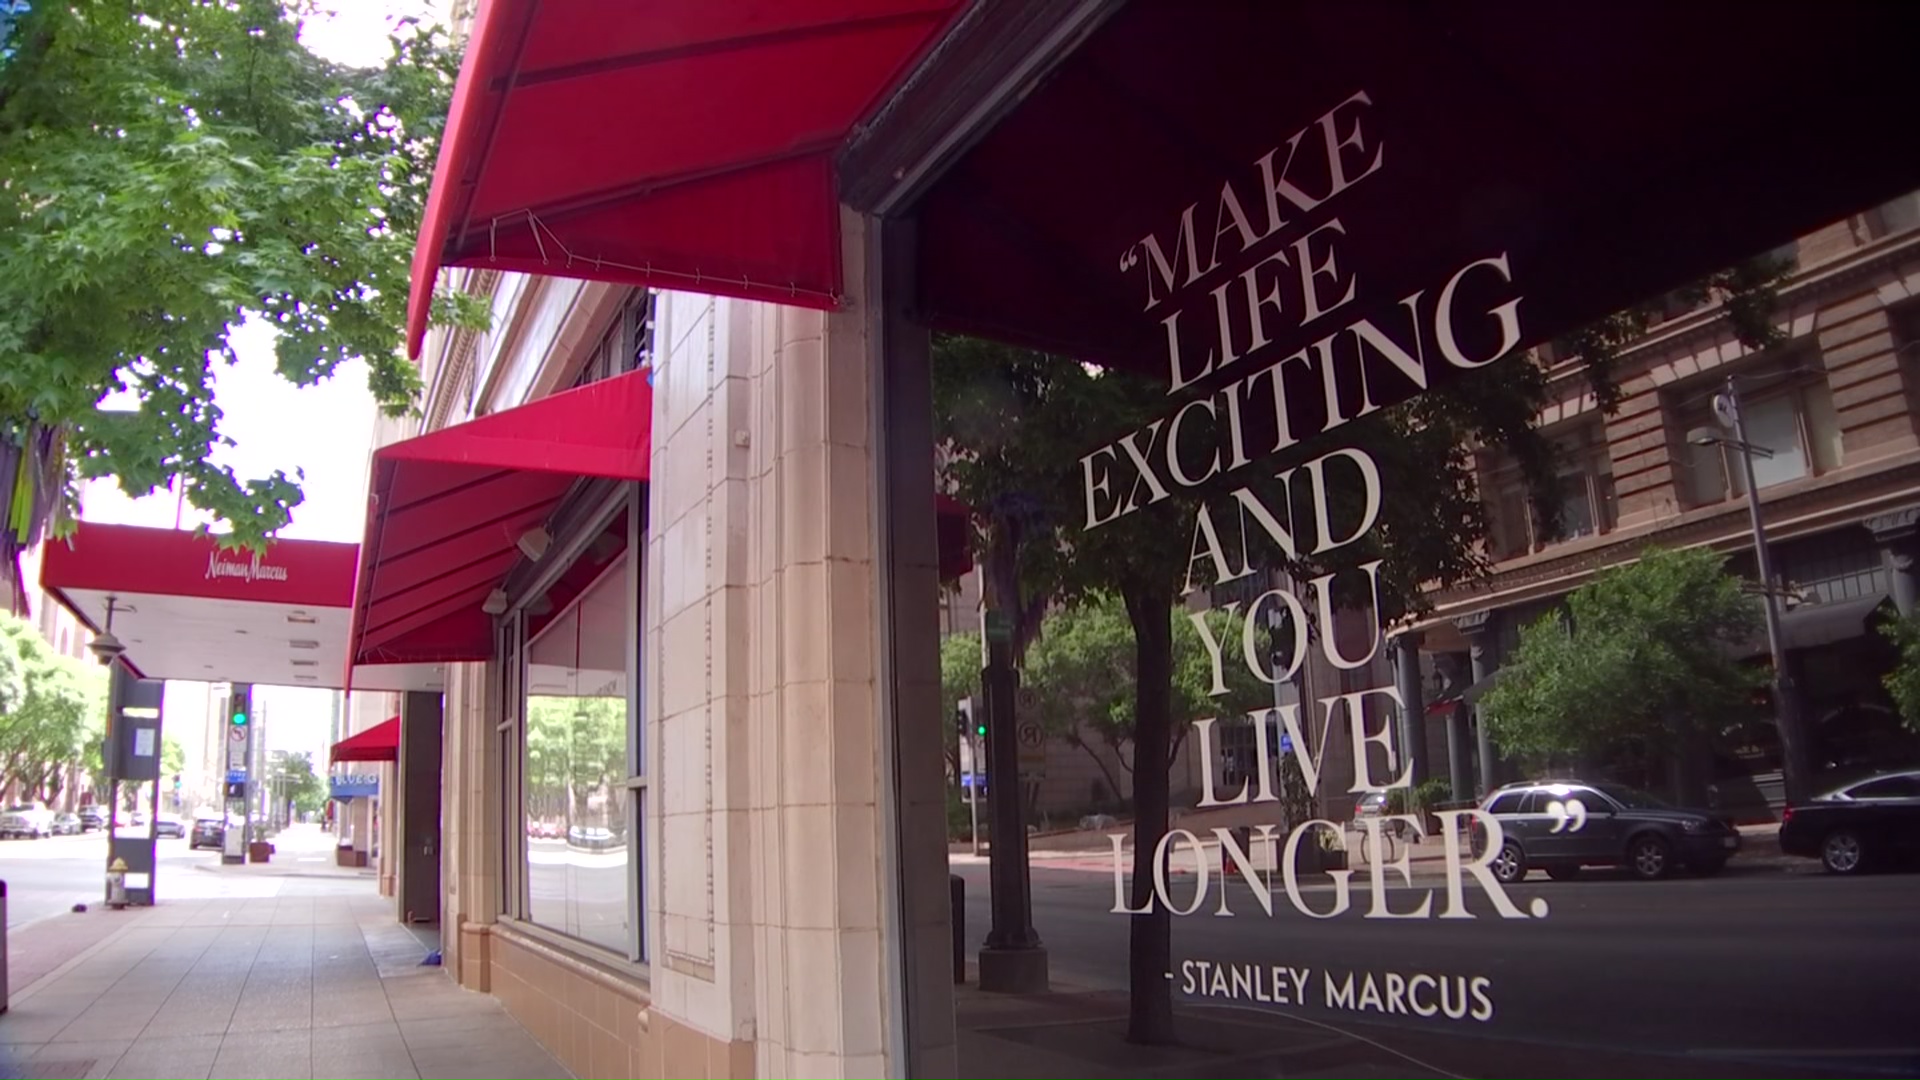 Report: Dallas-based Neiman Marcus preparing to declare bankruptcy